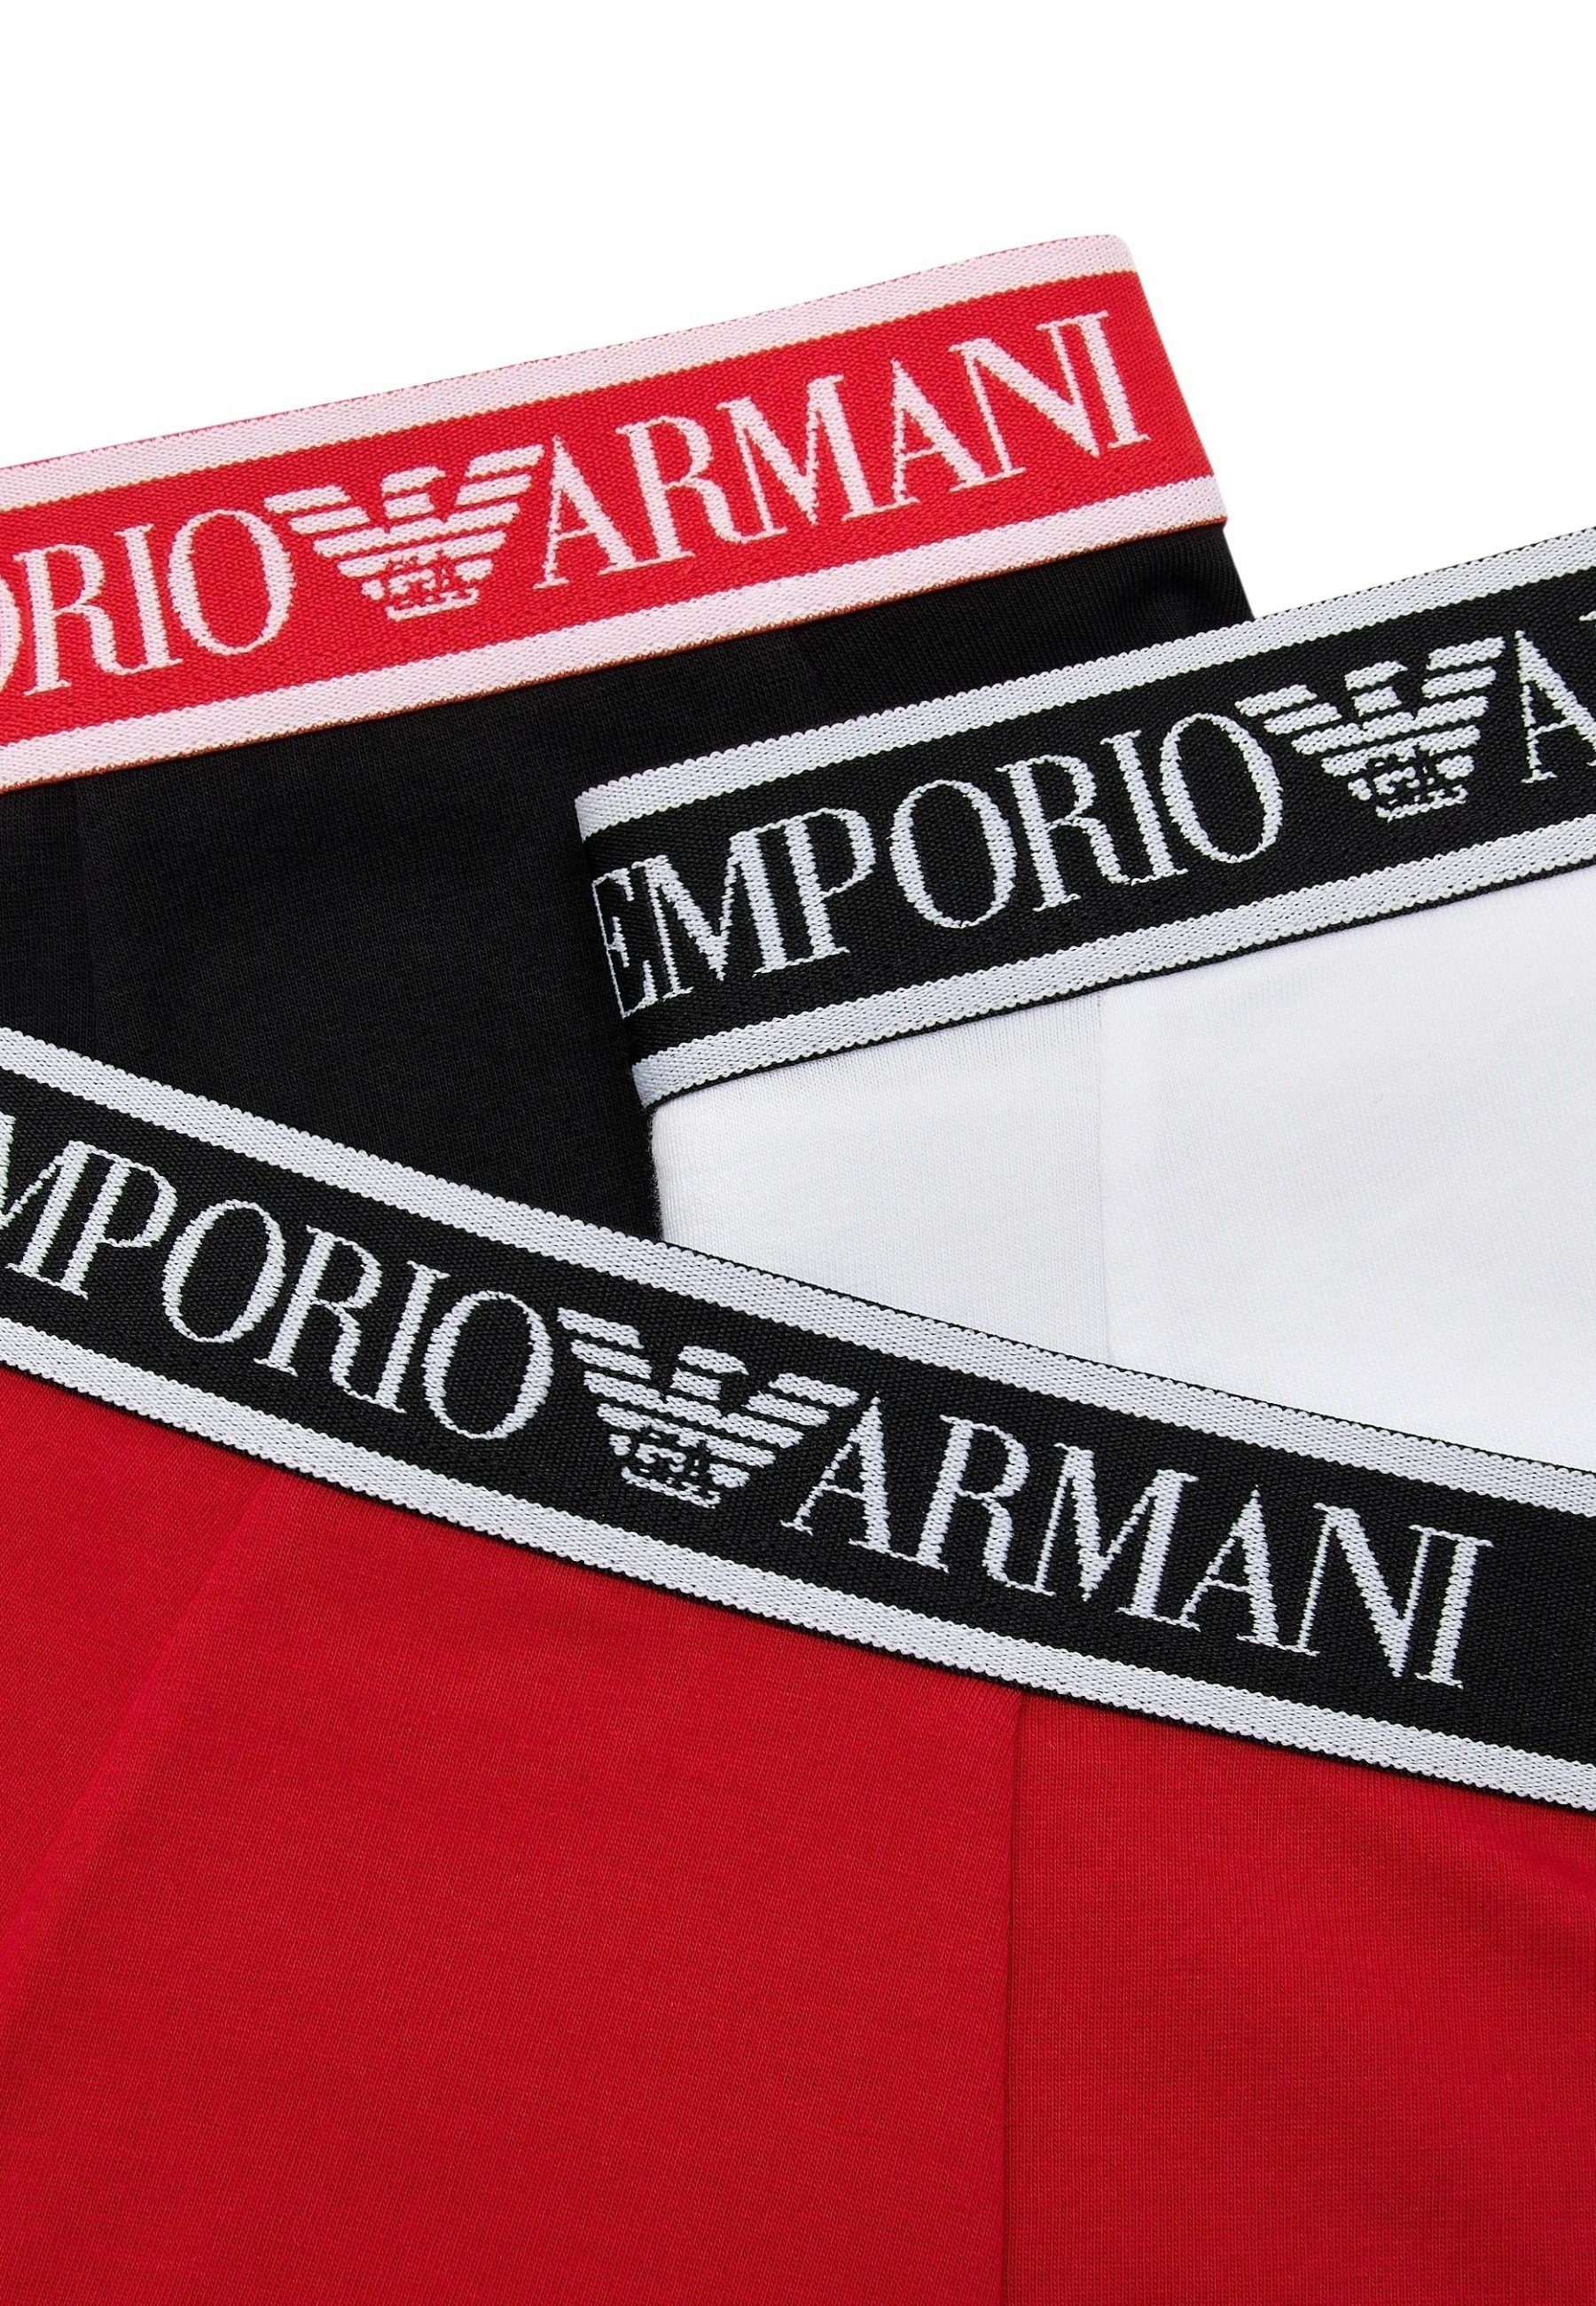 Trunks Weiß/Schwarz/Rot (3-St) Armani Pack Shorts Emporio Boxershorts Knit 3